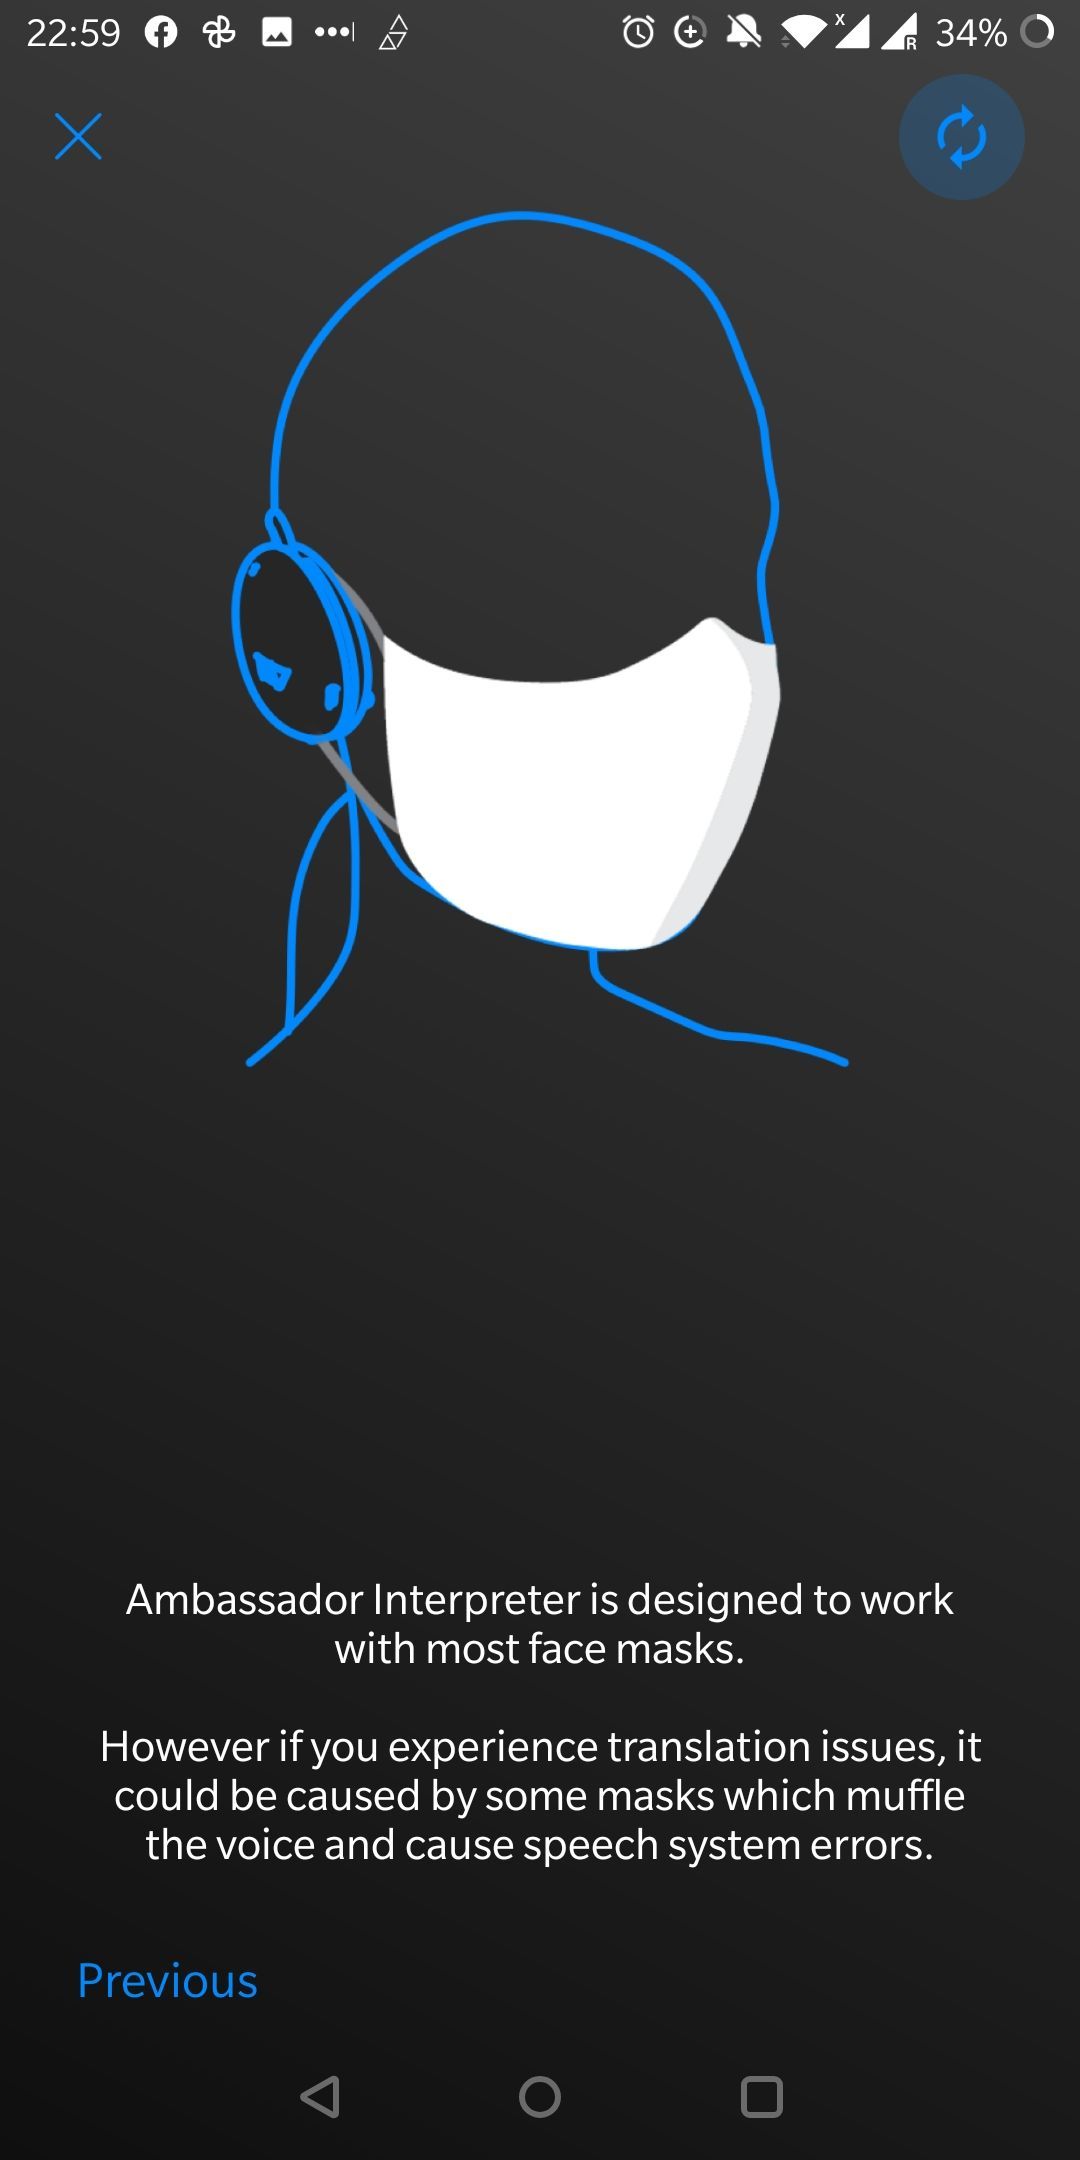 Waverly Labs Ambassador Interpreter works with masks